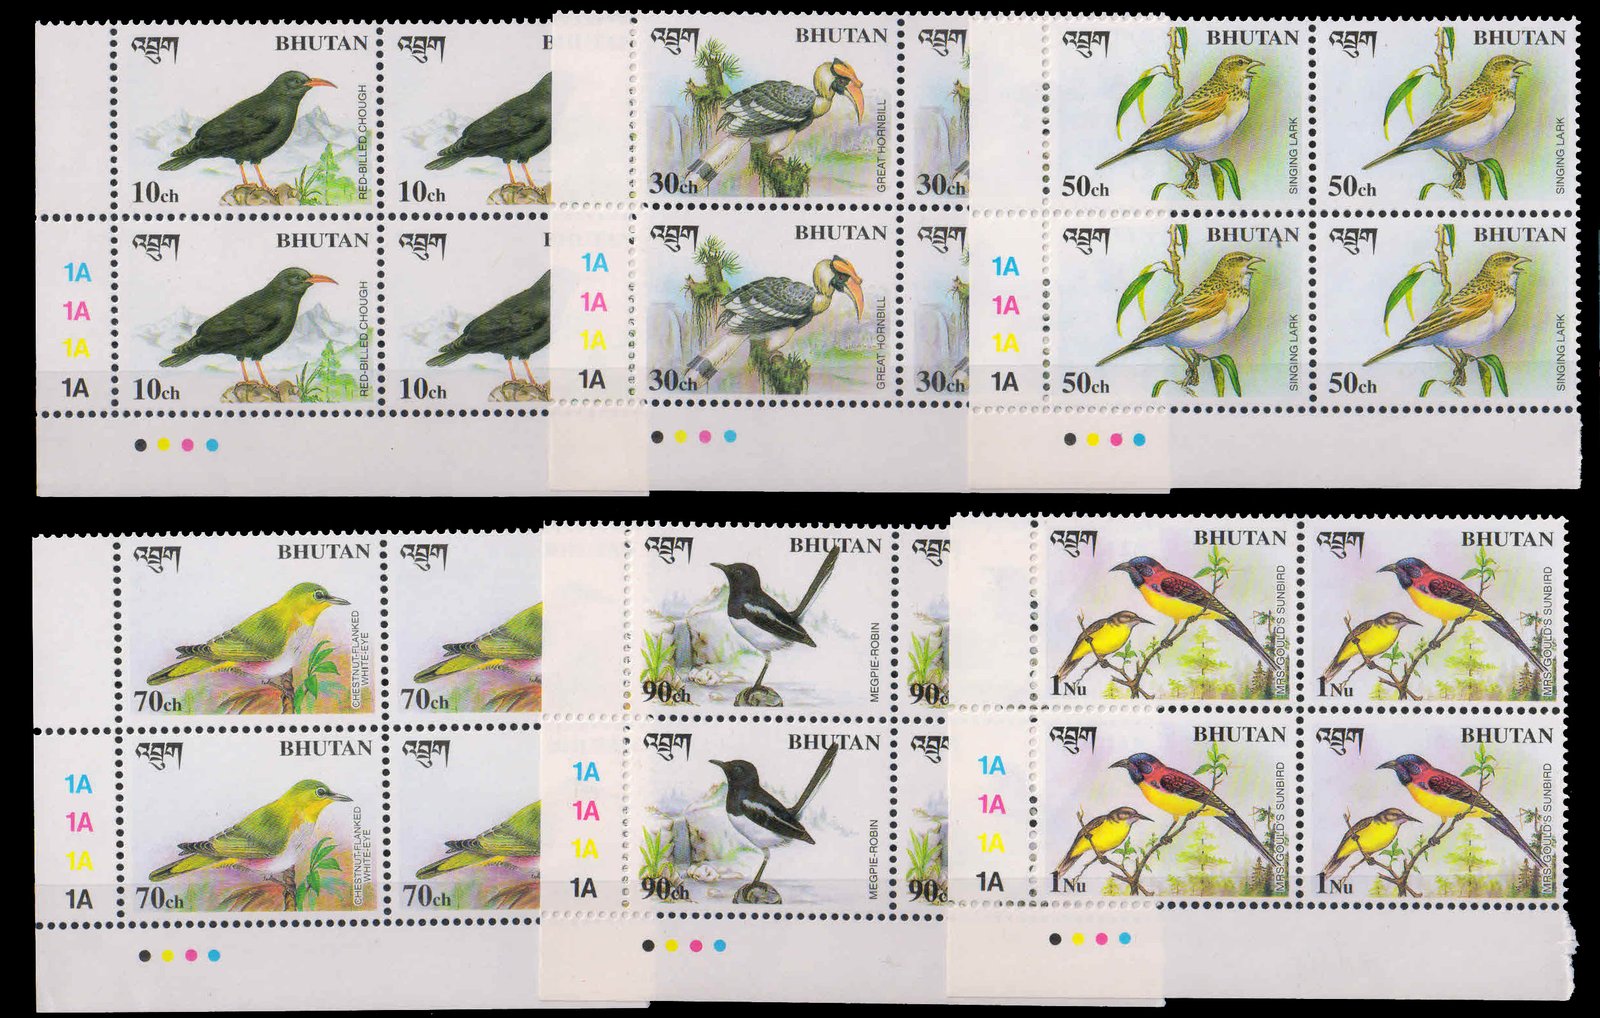 BHUTAN 1998-Birds, 6 Different Blocks with Traffic Light, 3rd Position, MNH, S.G. 1272-1277, Cat £ 5-